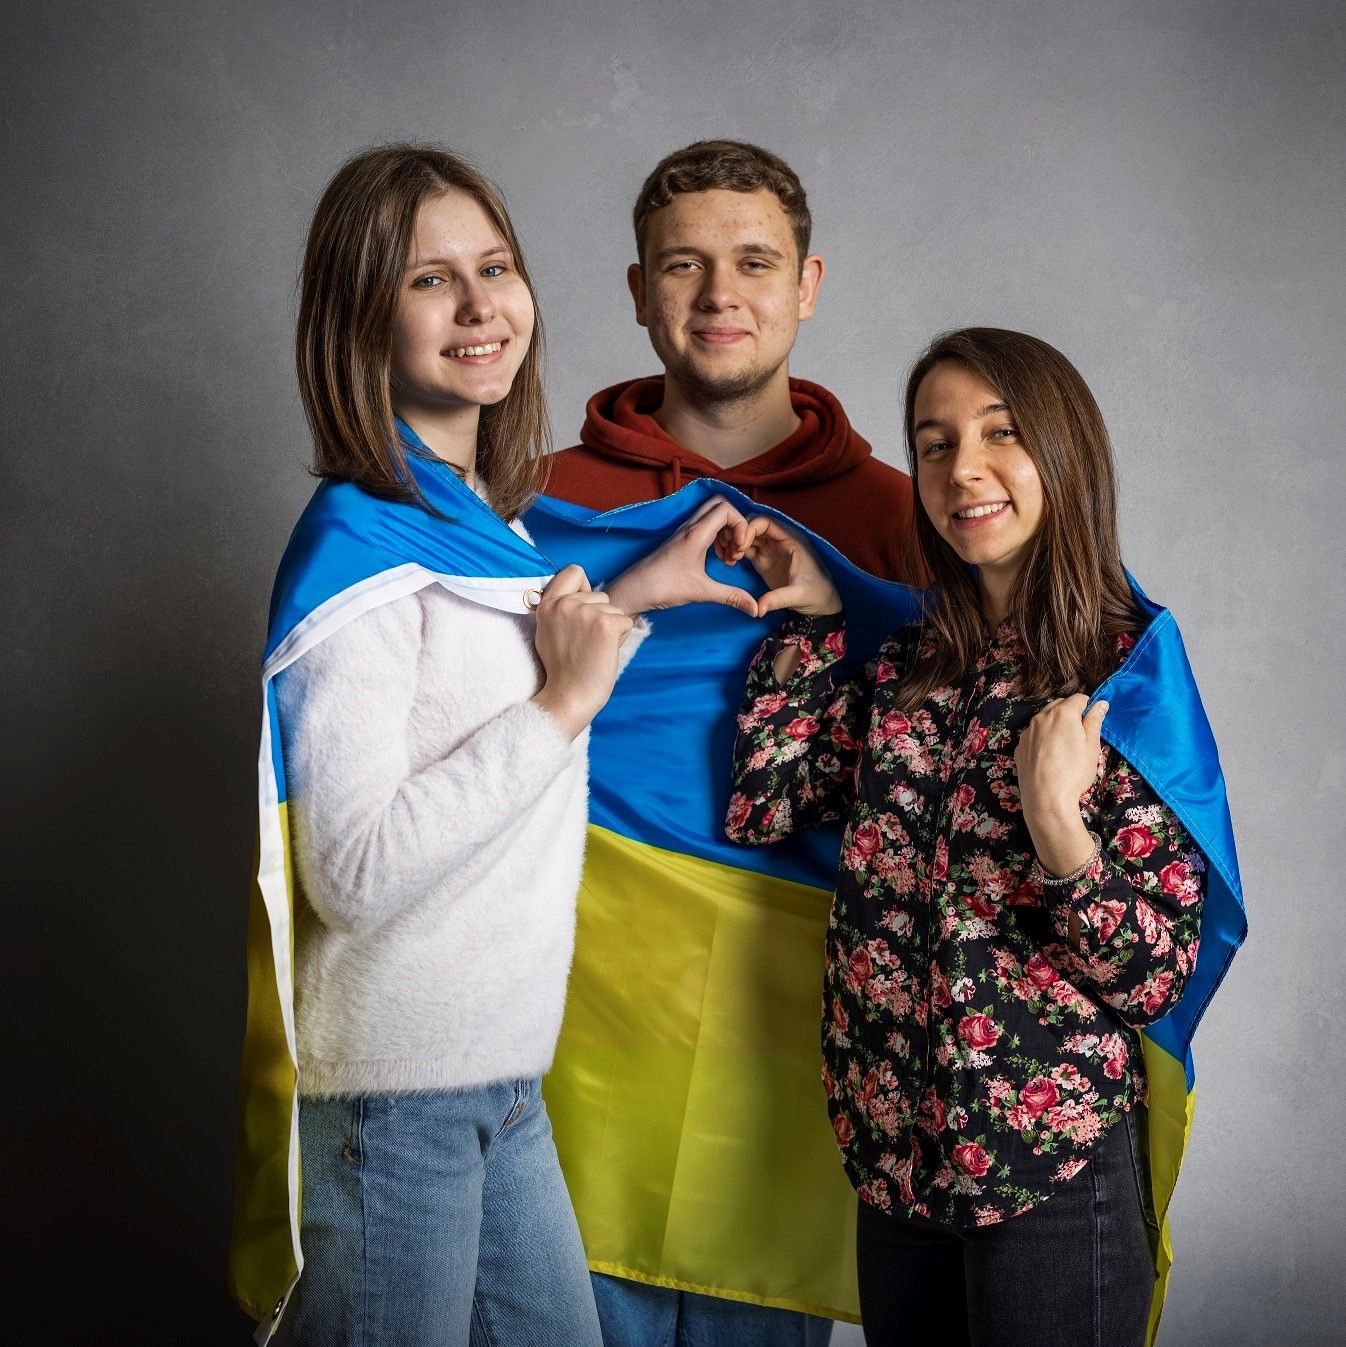 Ukrainian students drape their flag over their shoulders